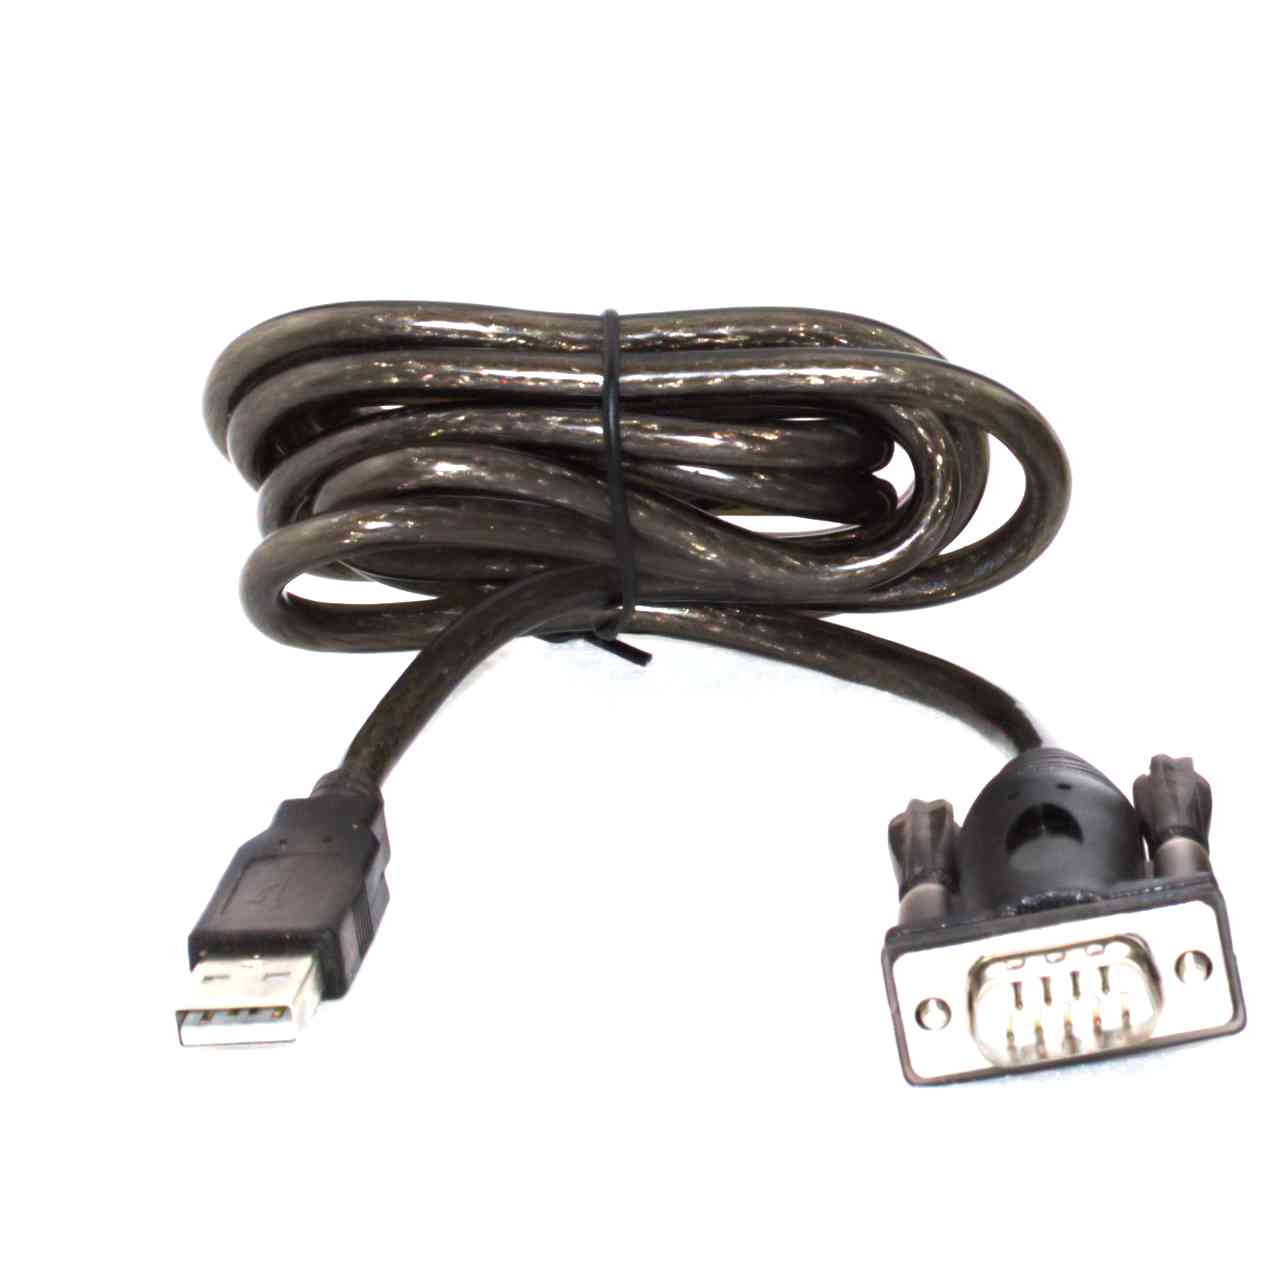 TL-EVK-USB-SA | USB to serial adapter cable